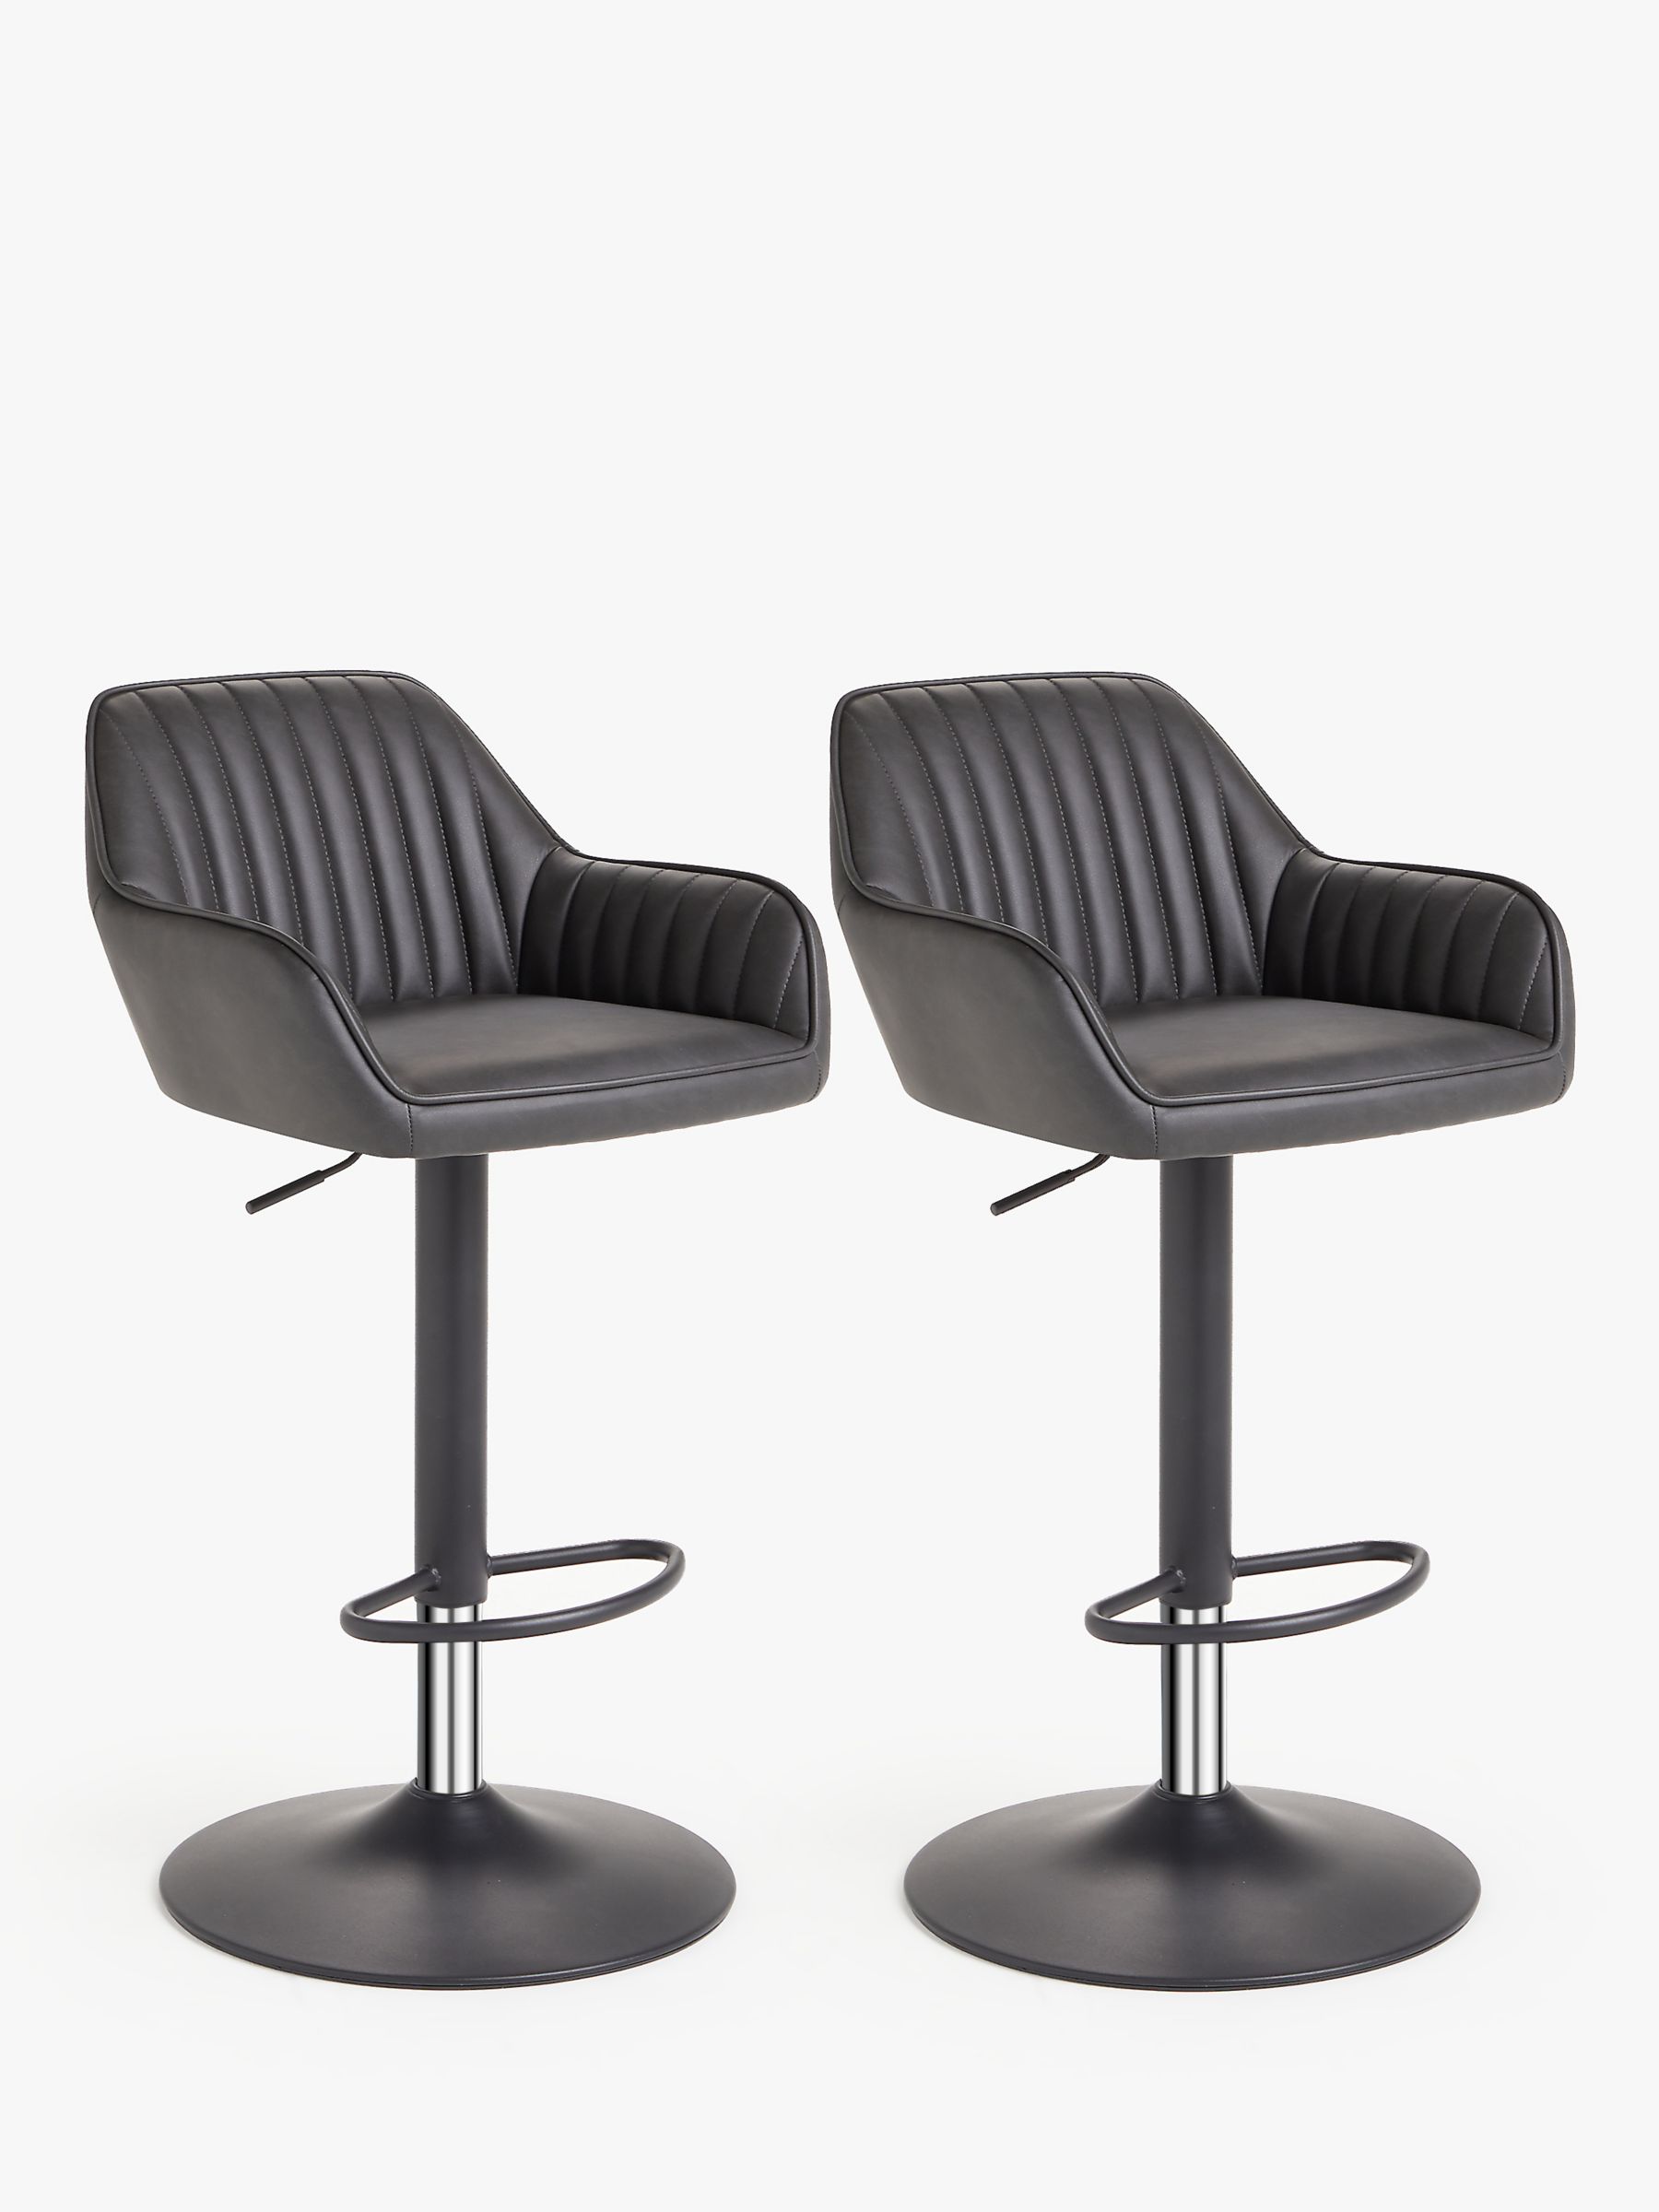 John Lewis & Partners Brooks Gas Lift Adjustable Bar Chairs, Set of 2 at John Lewis & Partners